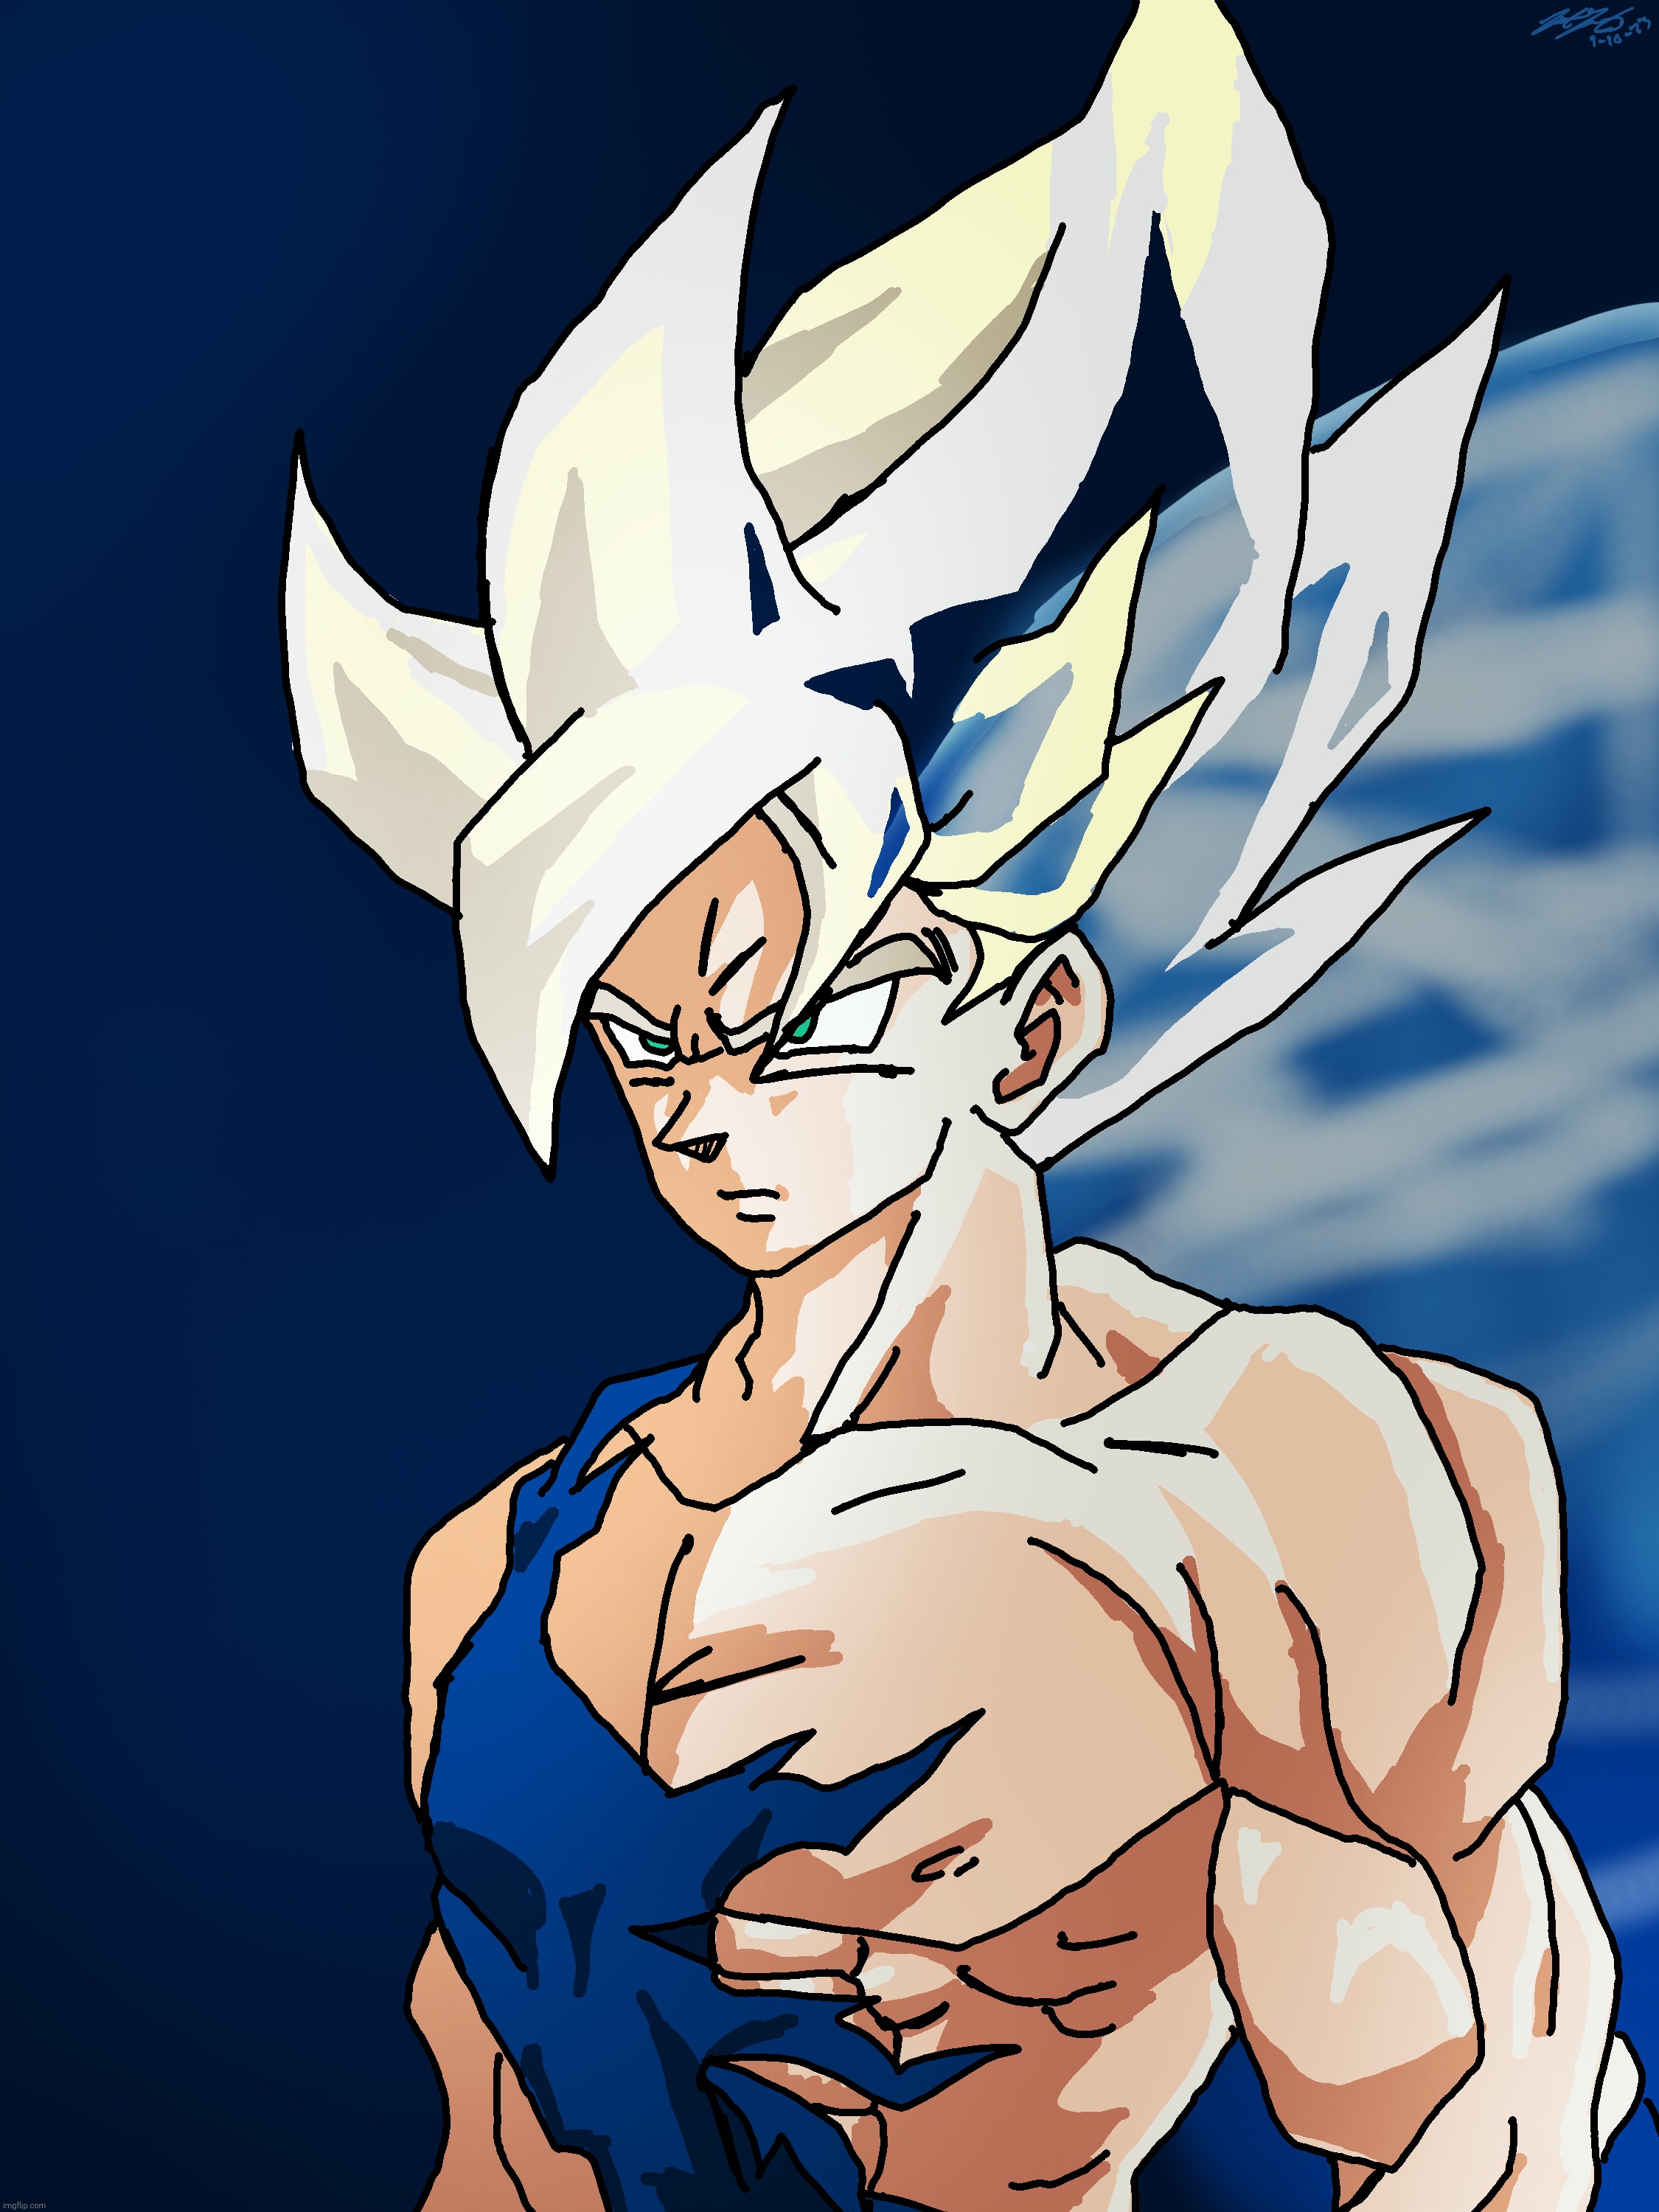 Protector of Earth, Son Goku | image tagged in dbz,dragon ball z,goku,super saiyan,drawings | made w/ Imgflip meme maker